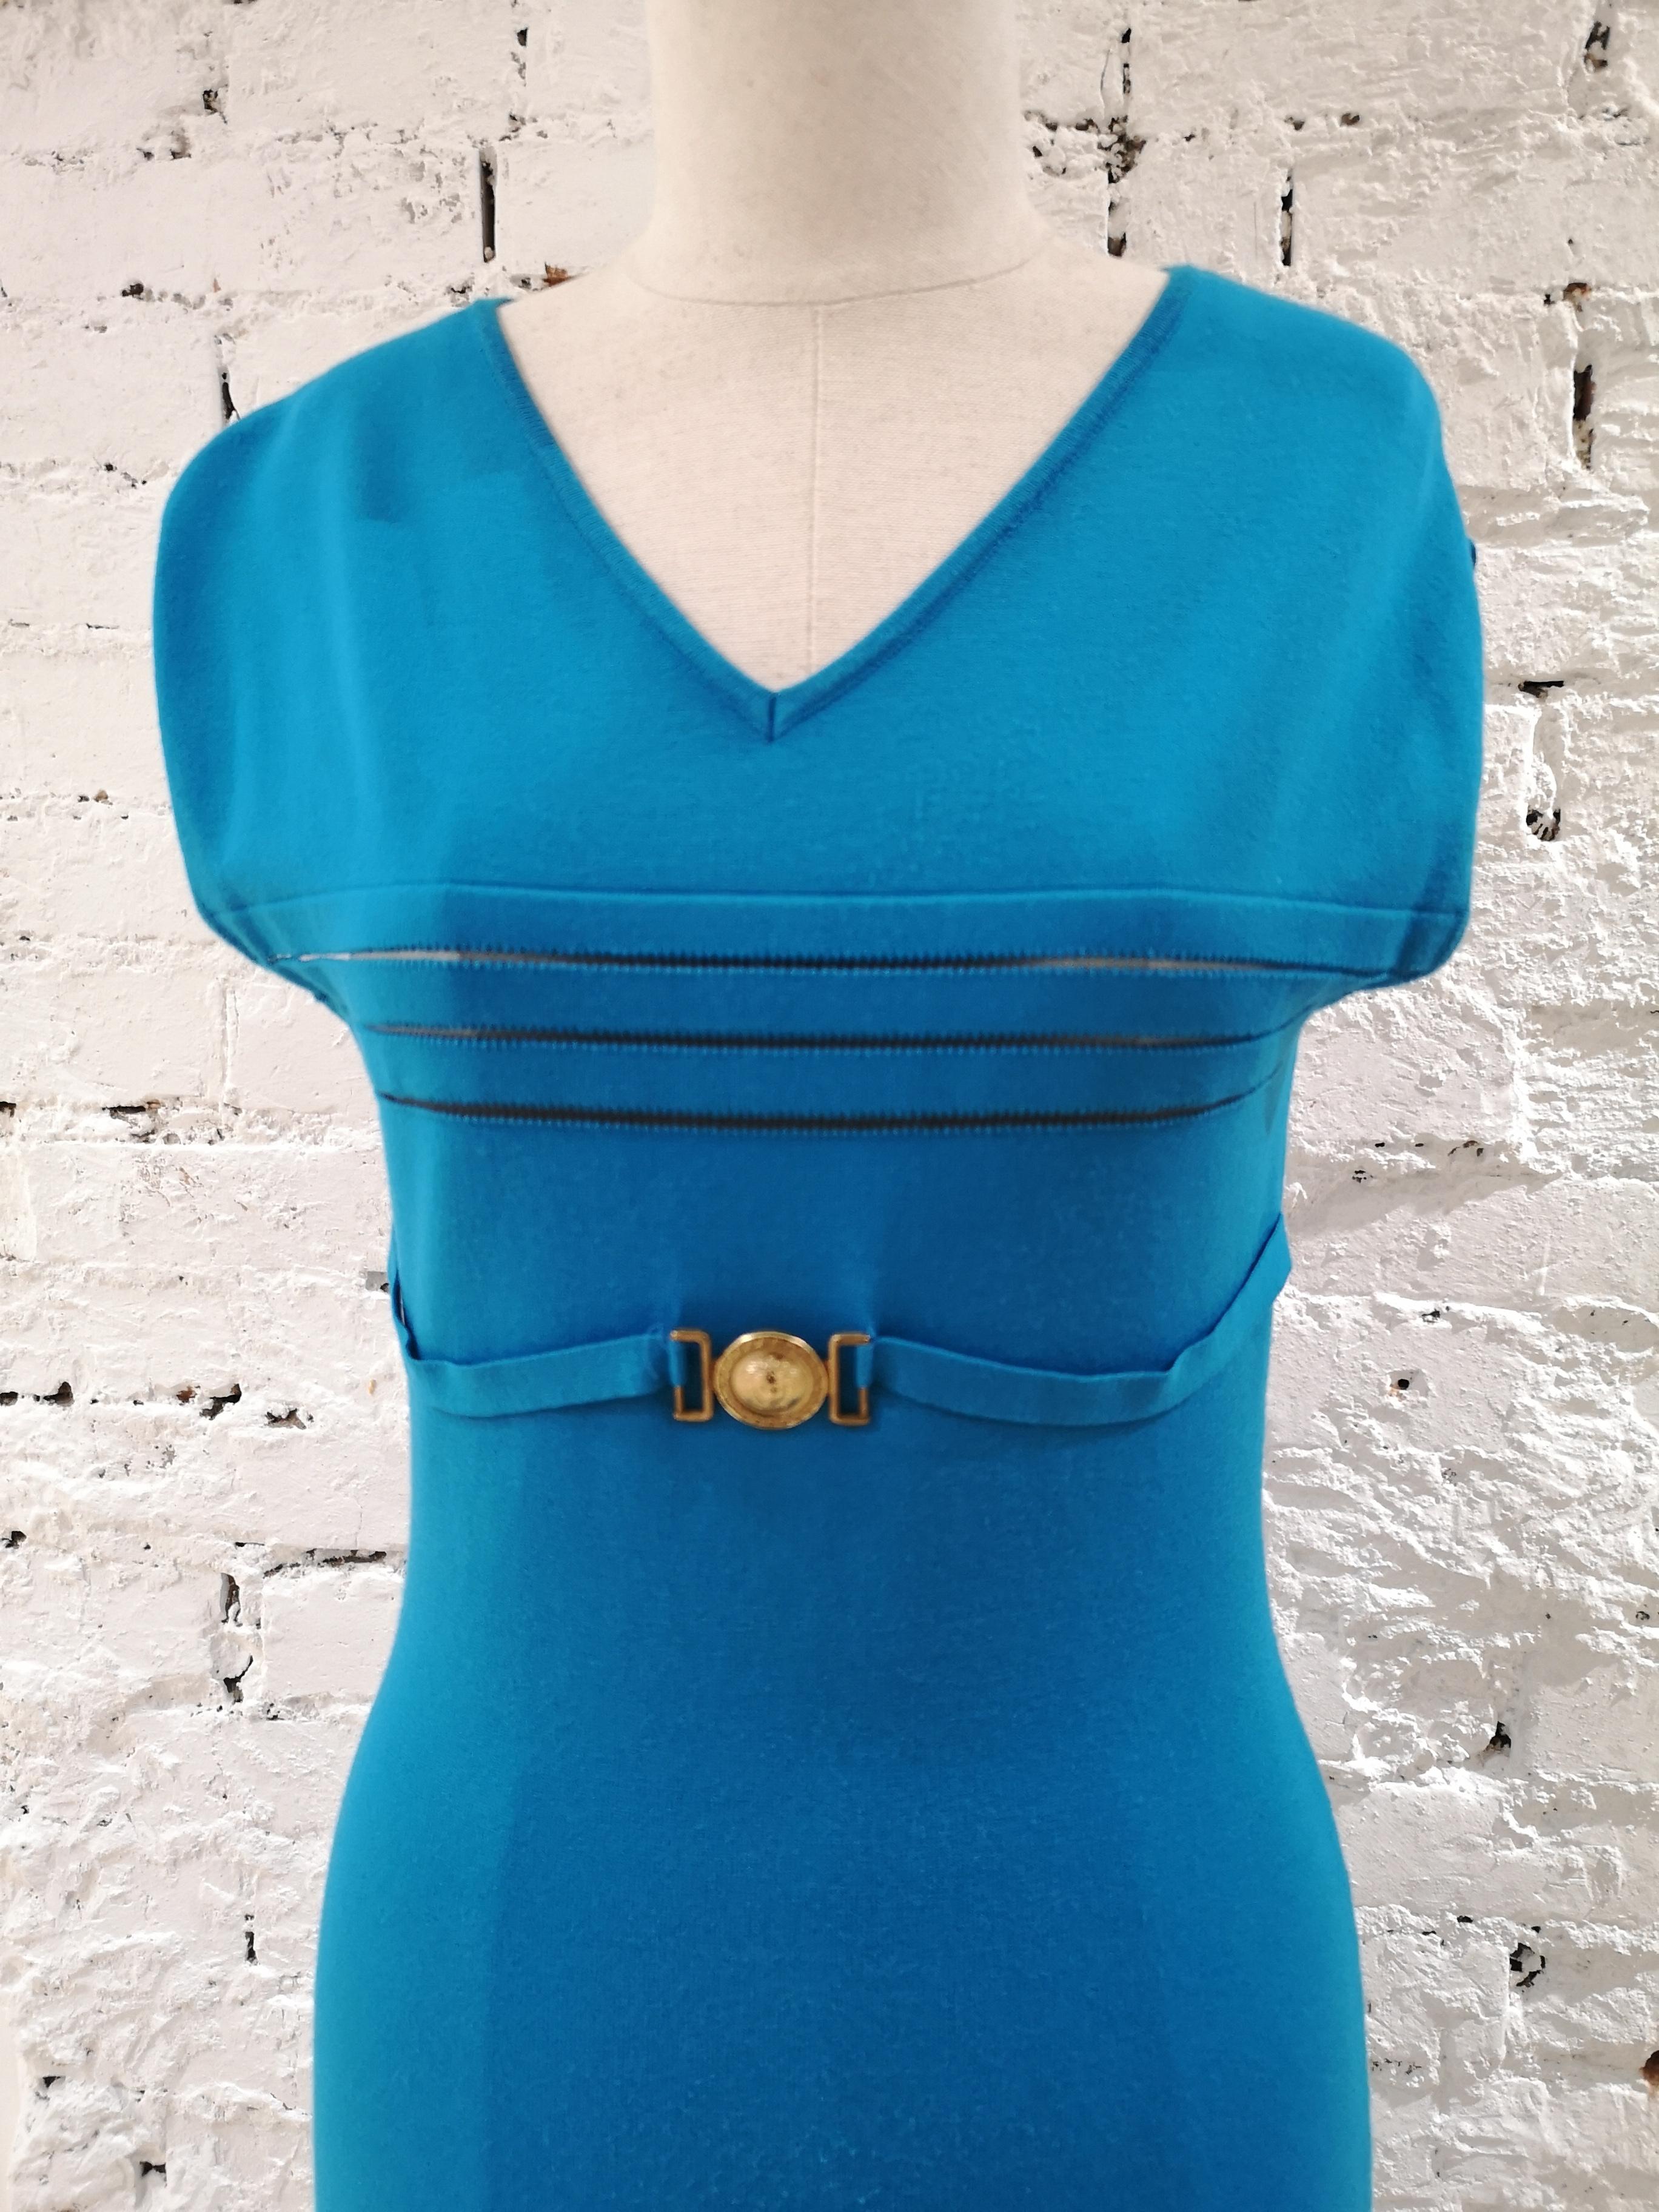 Versace Collecction Blue Dress NWOT 7